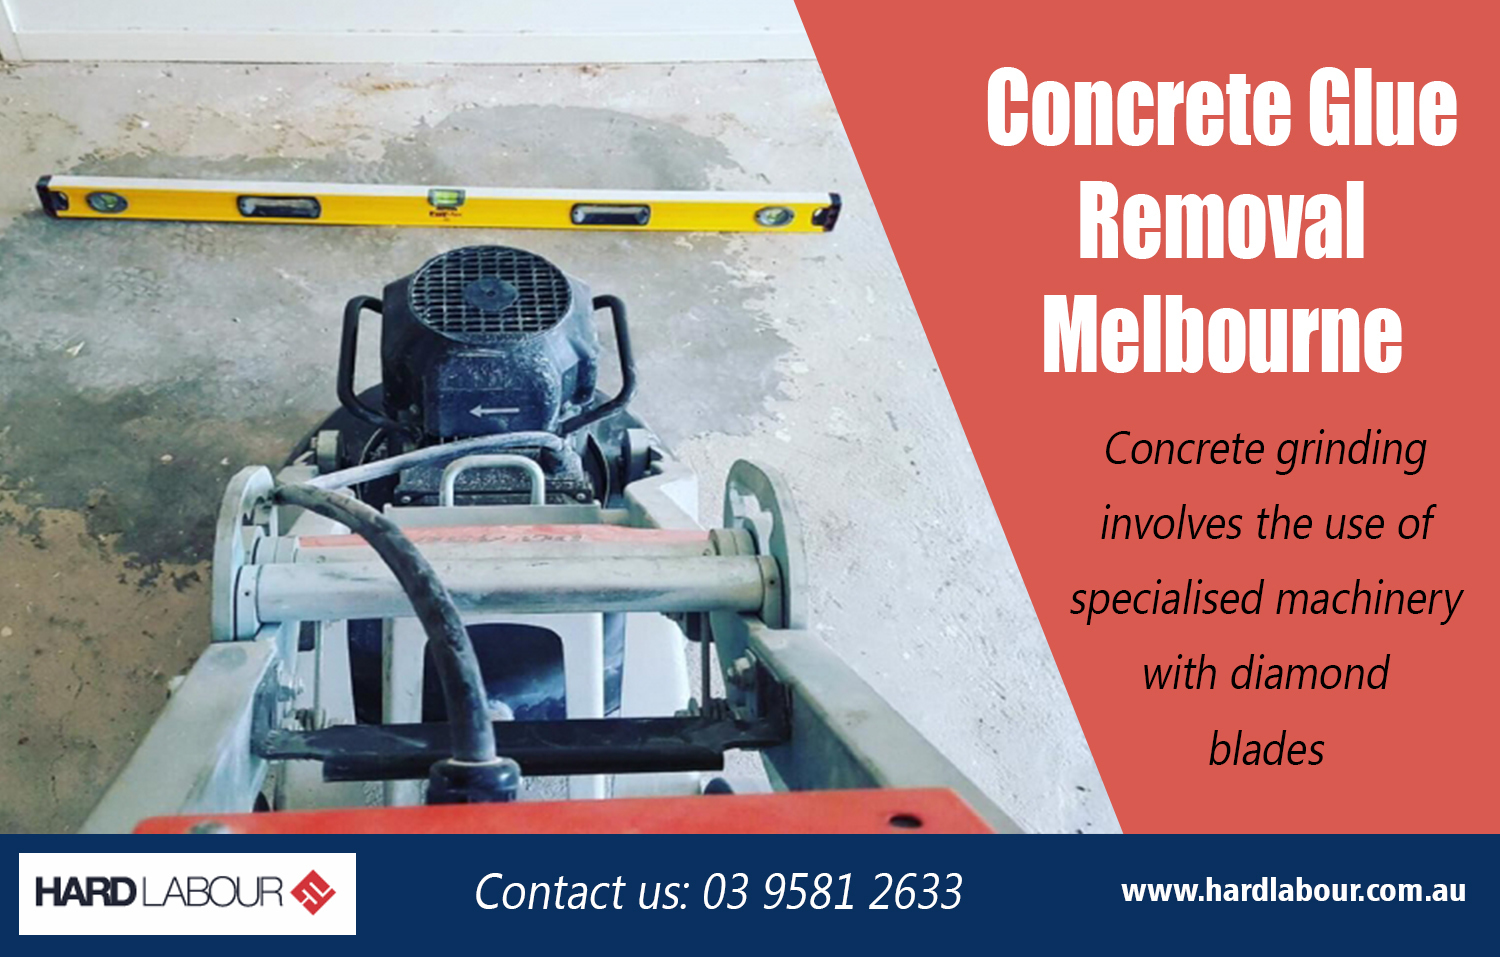 Concrete Glue Removal Melbourne|https://hardlabour.com.au/